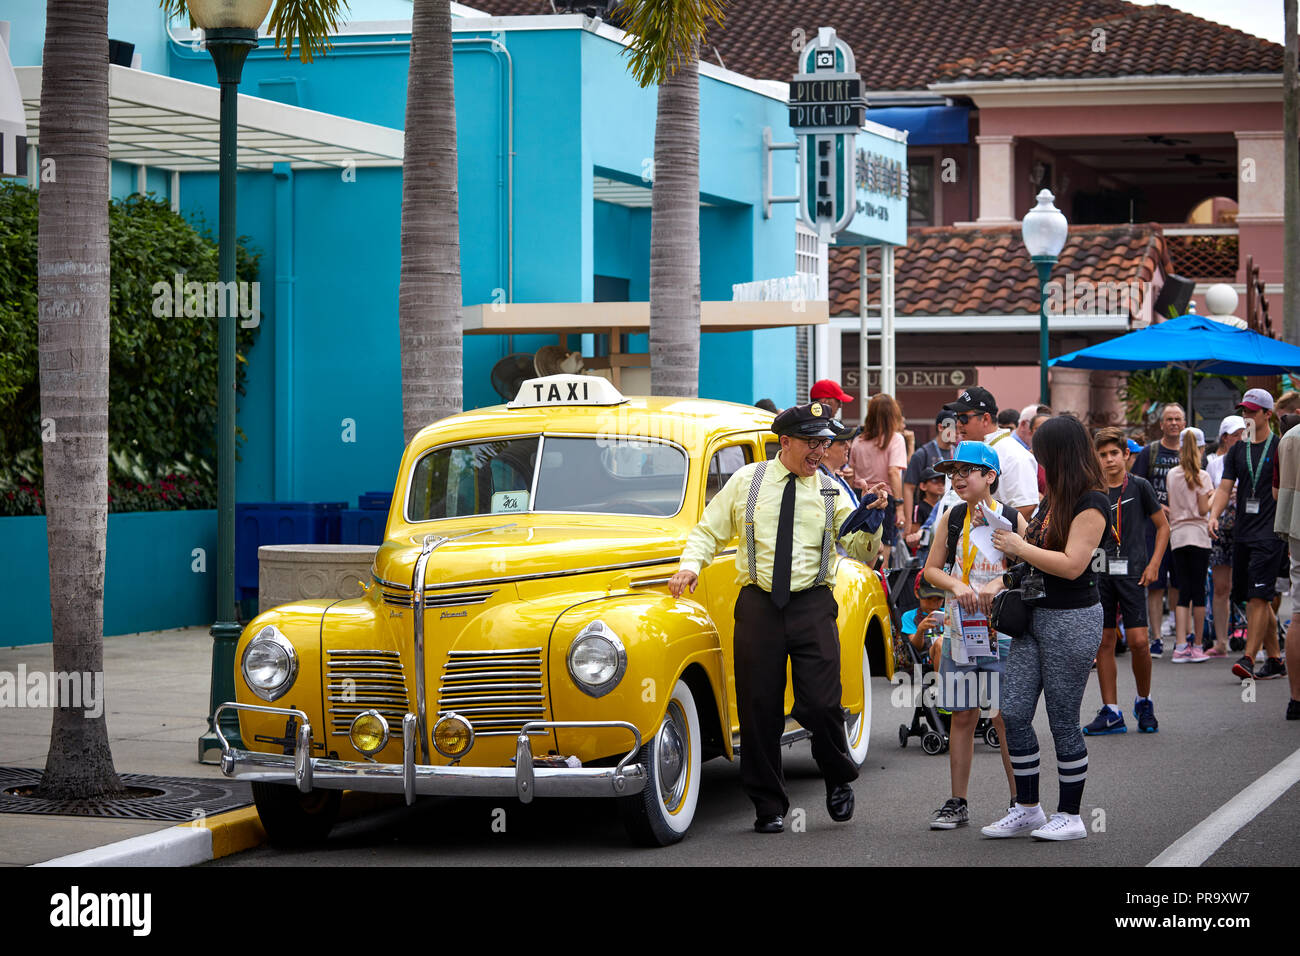 Yellow NYC style taxi cab in Universal studios Orlando, Florida Stock Photo